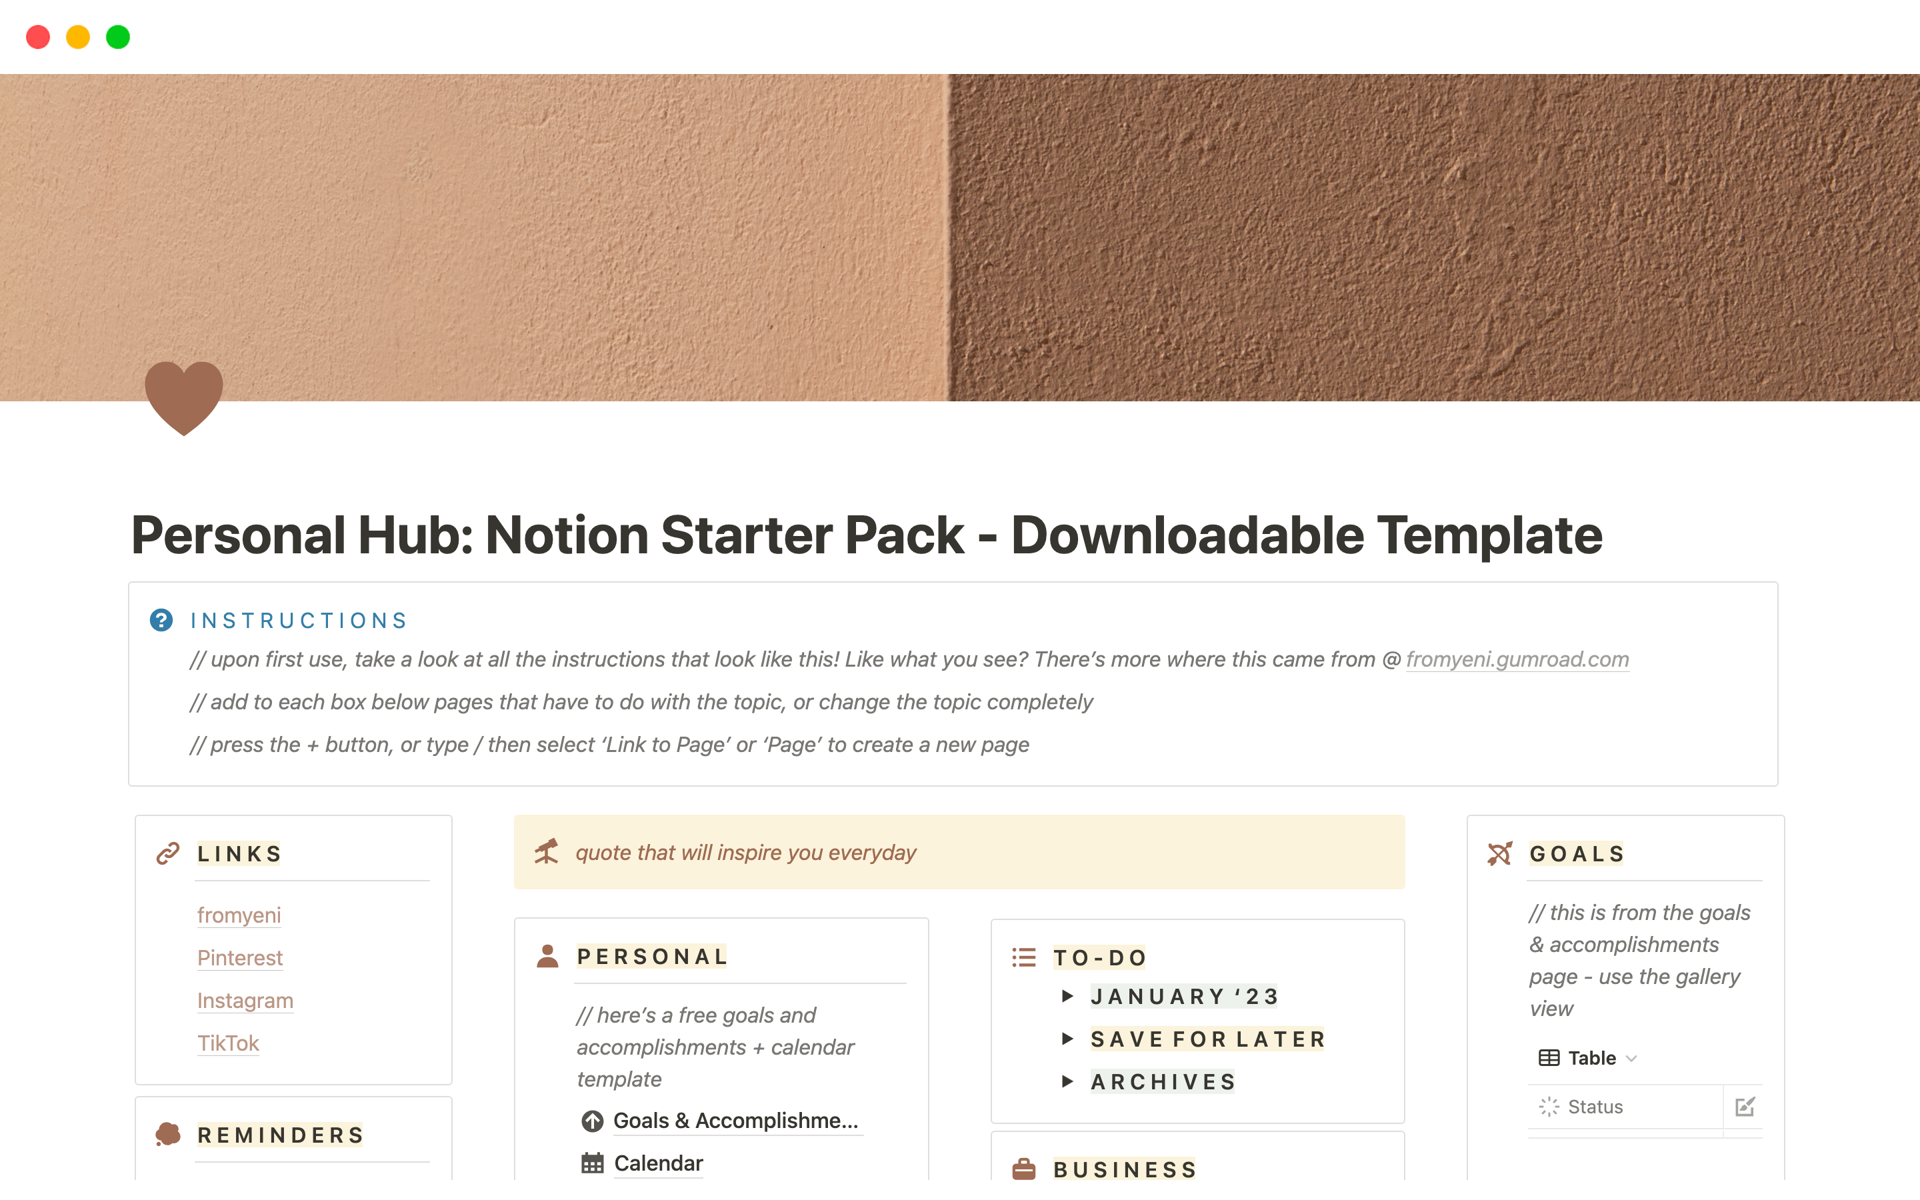 Aperçu du modèle de Personal Hub: Notion Starter Pack